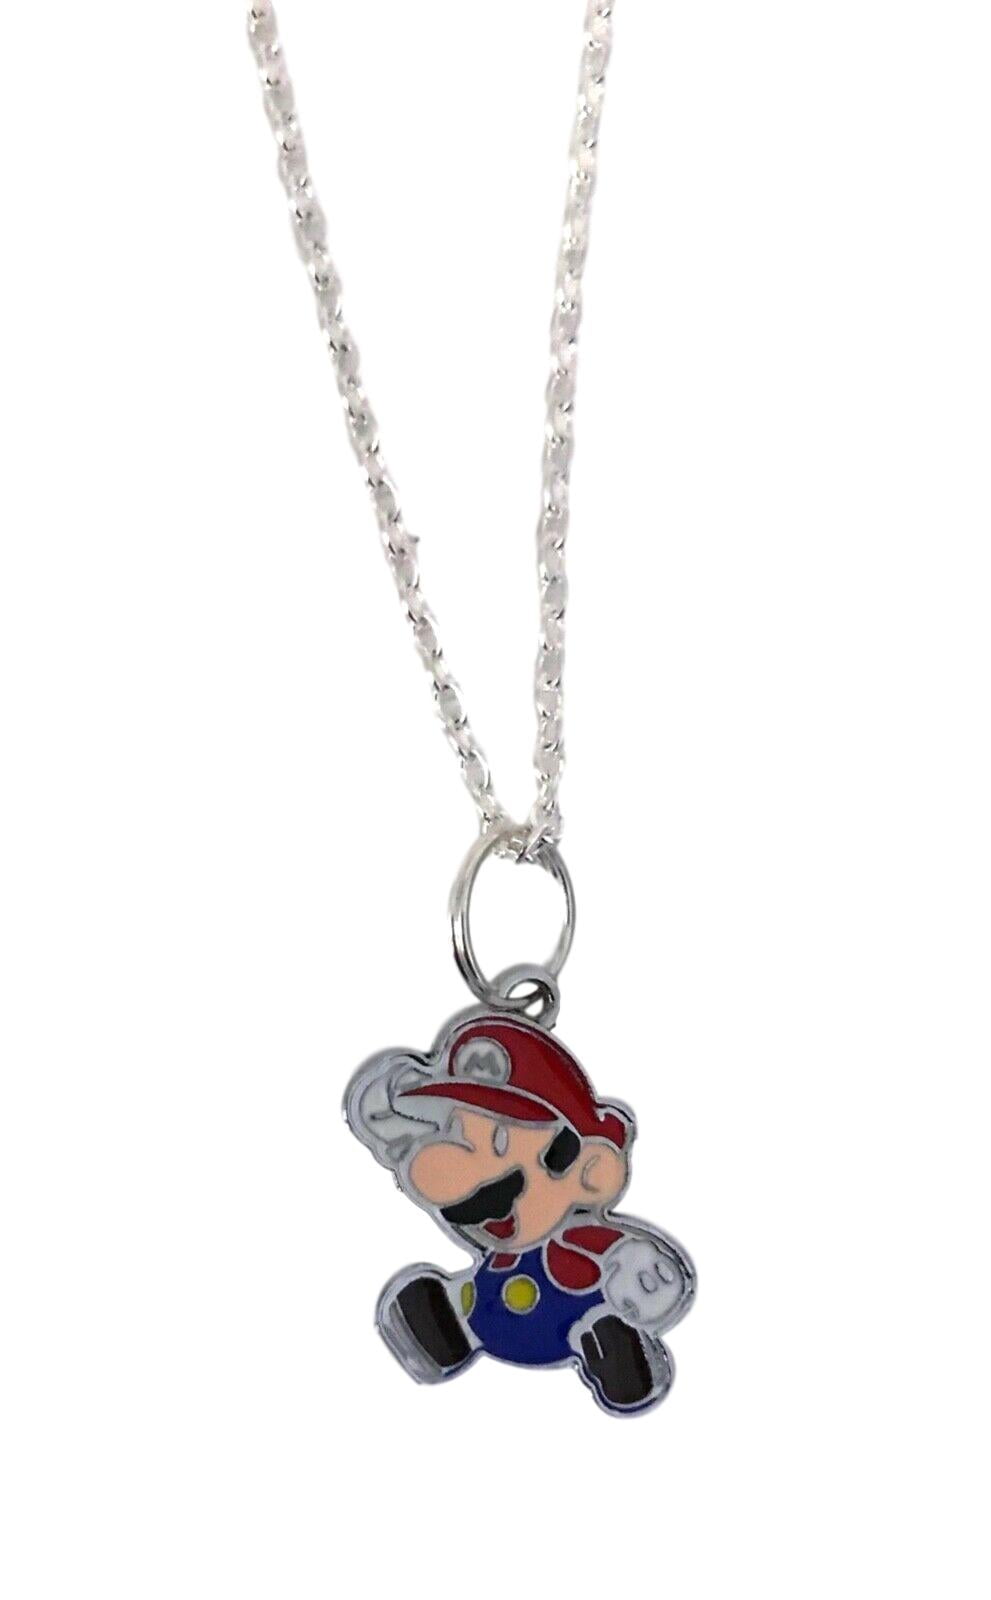 Super Mario Pendant Necklace Video Game Fan Jewelry